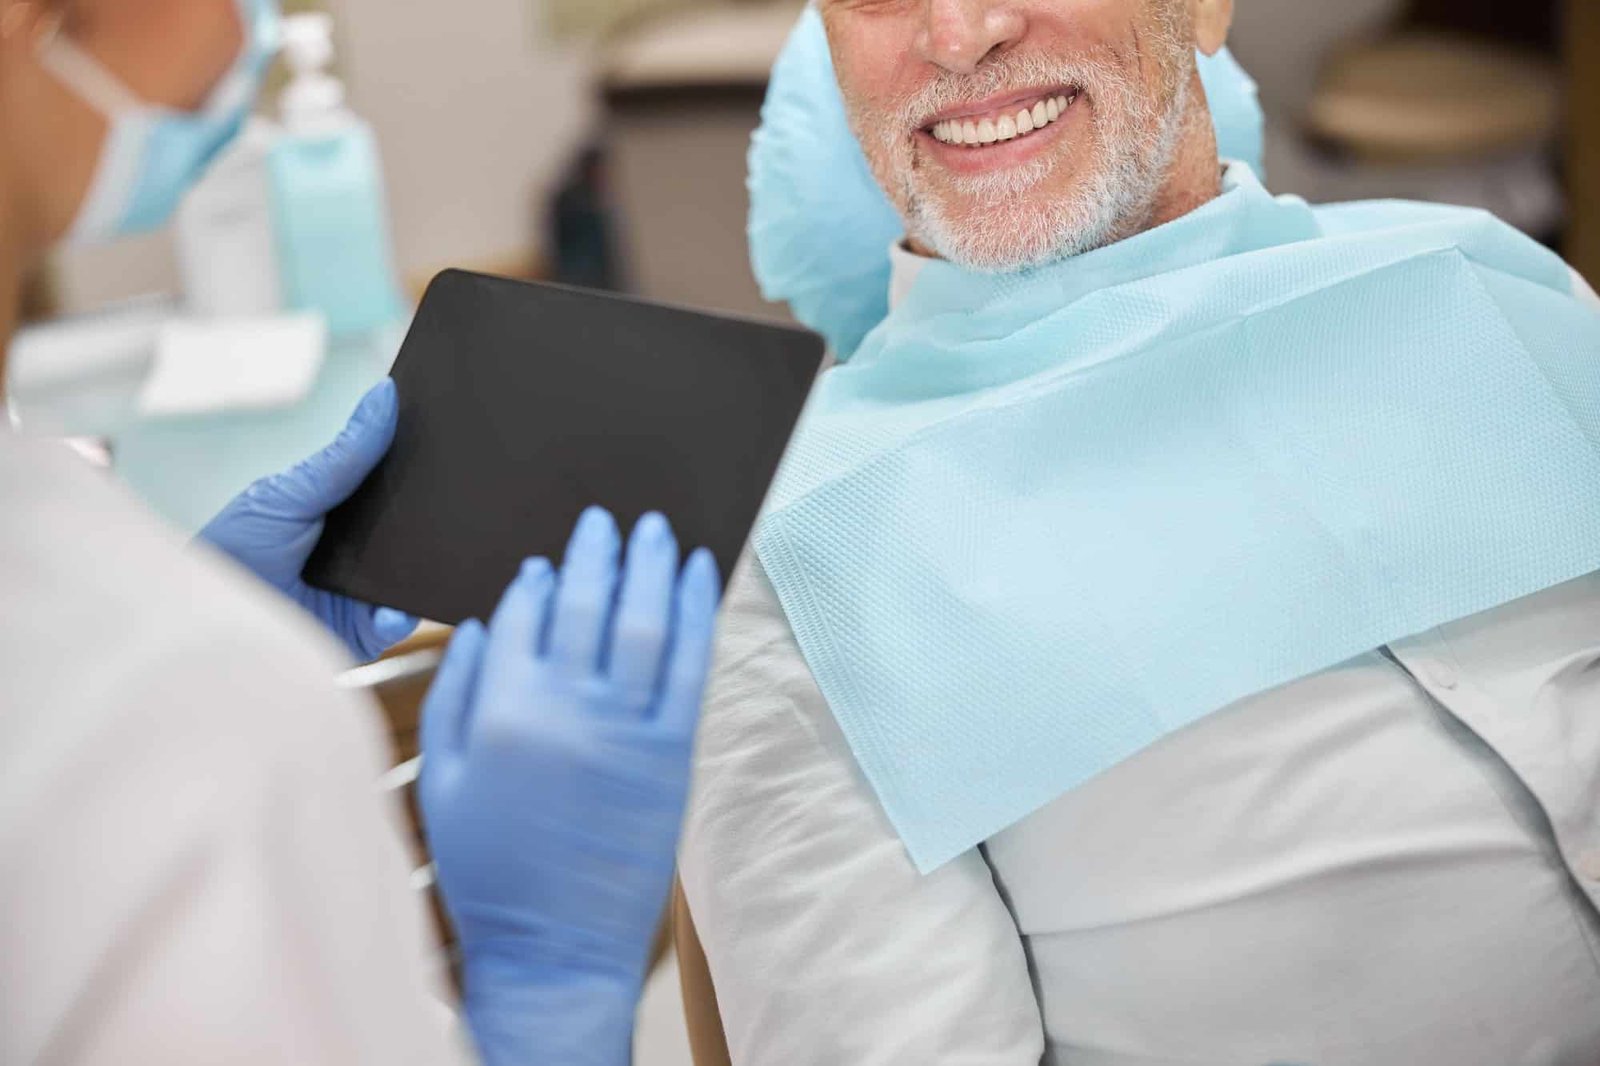 Senior gentleman smiling at the dentist holding a tablet